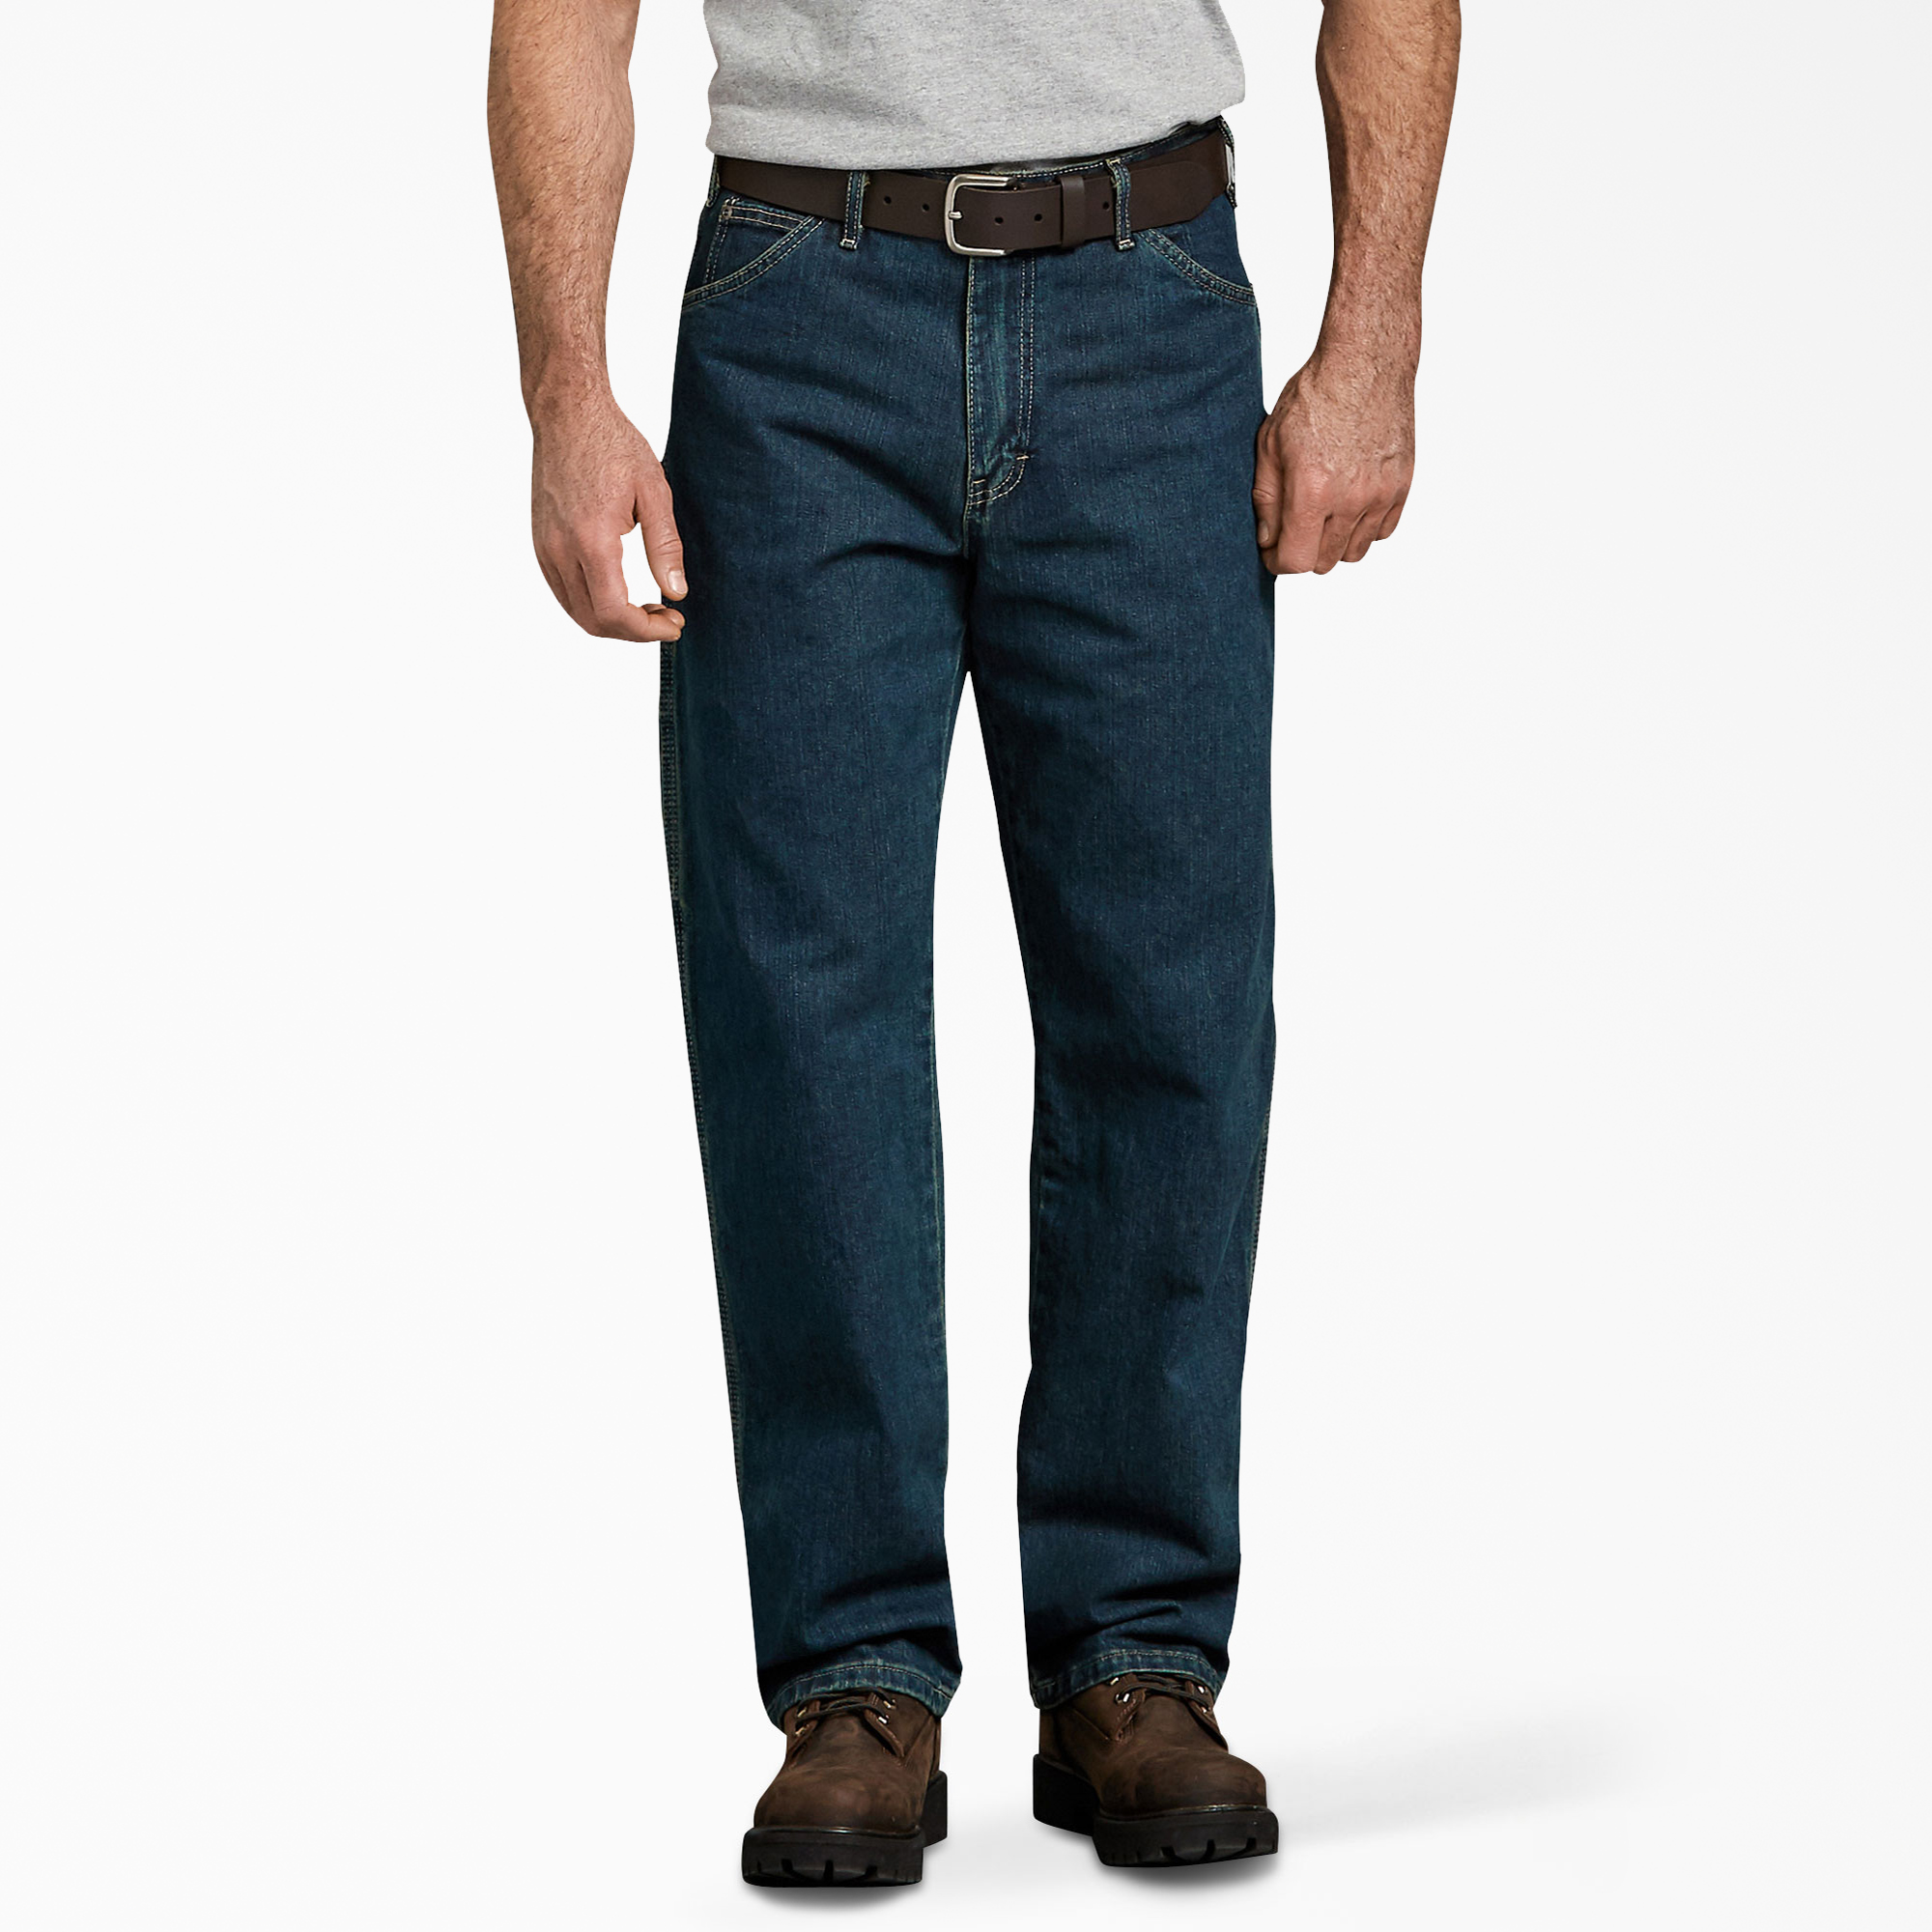 Carpenter Jeans for Men - Carpenter Blue Jeans & Denim, Tan Relaxed Fit Size 30, 36, 38, |